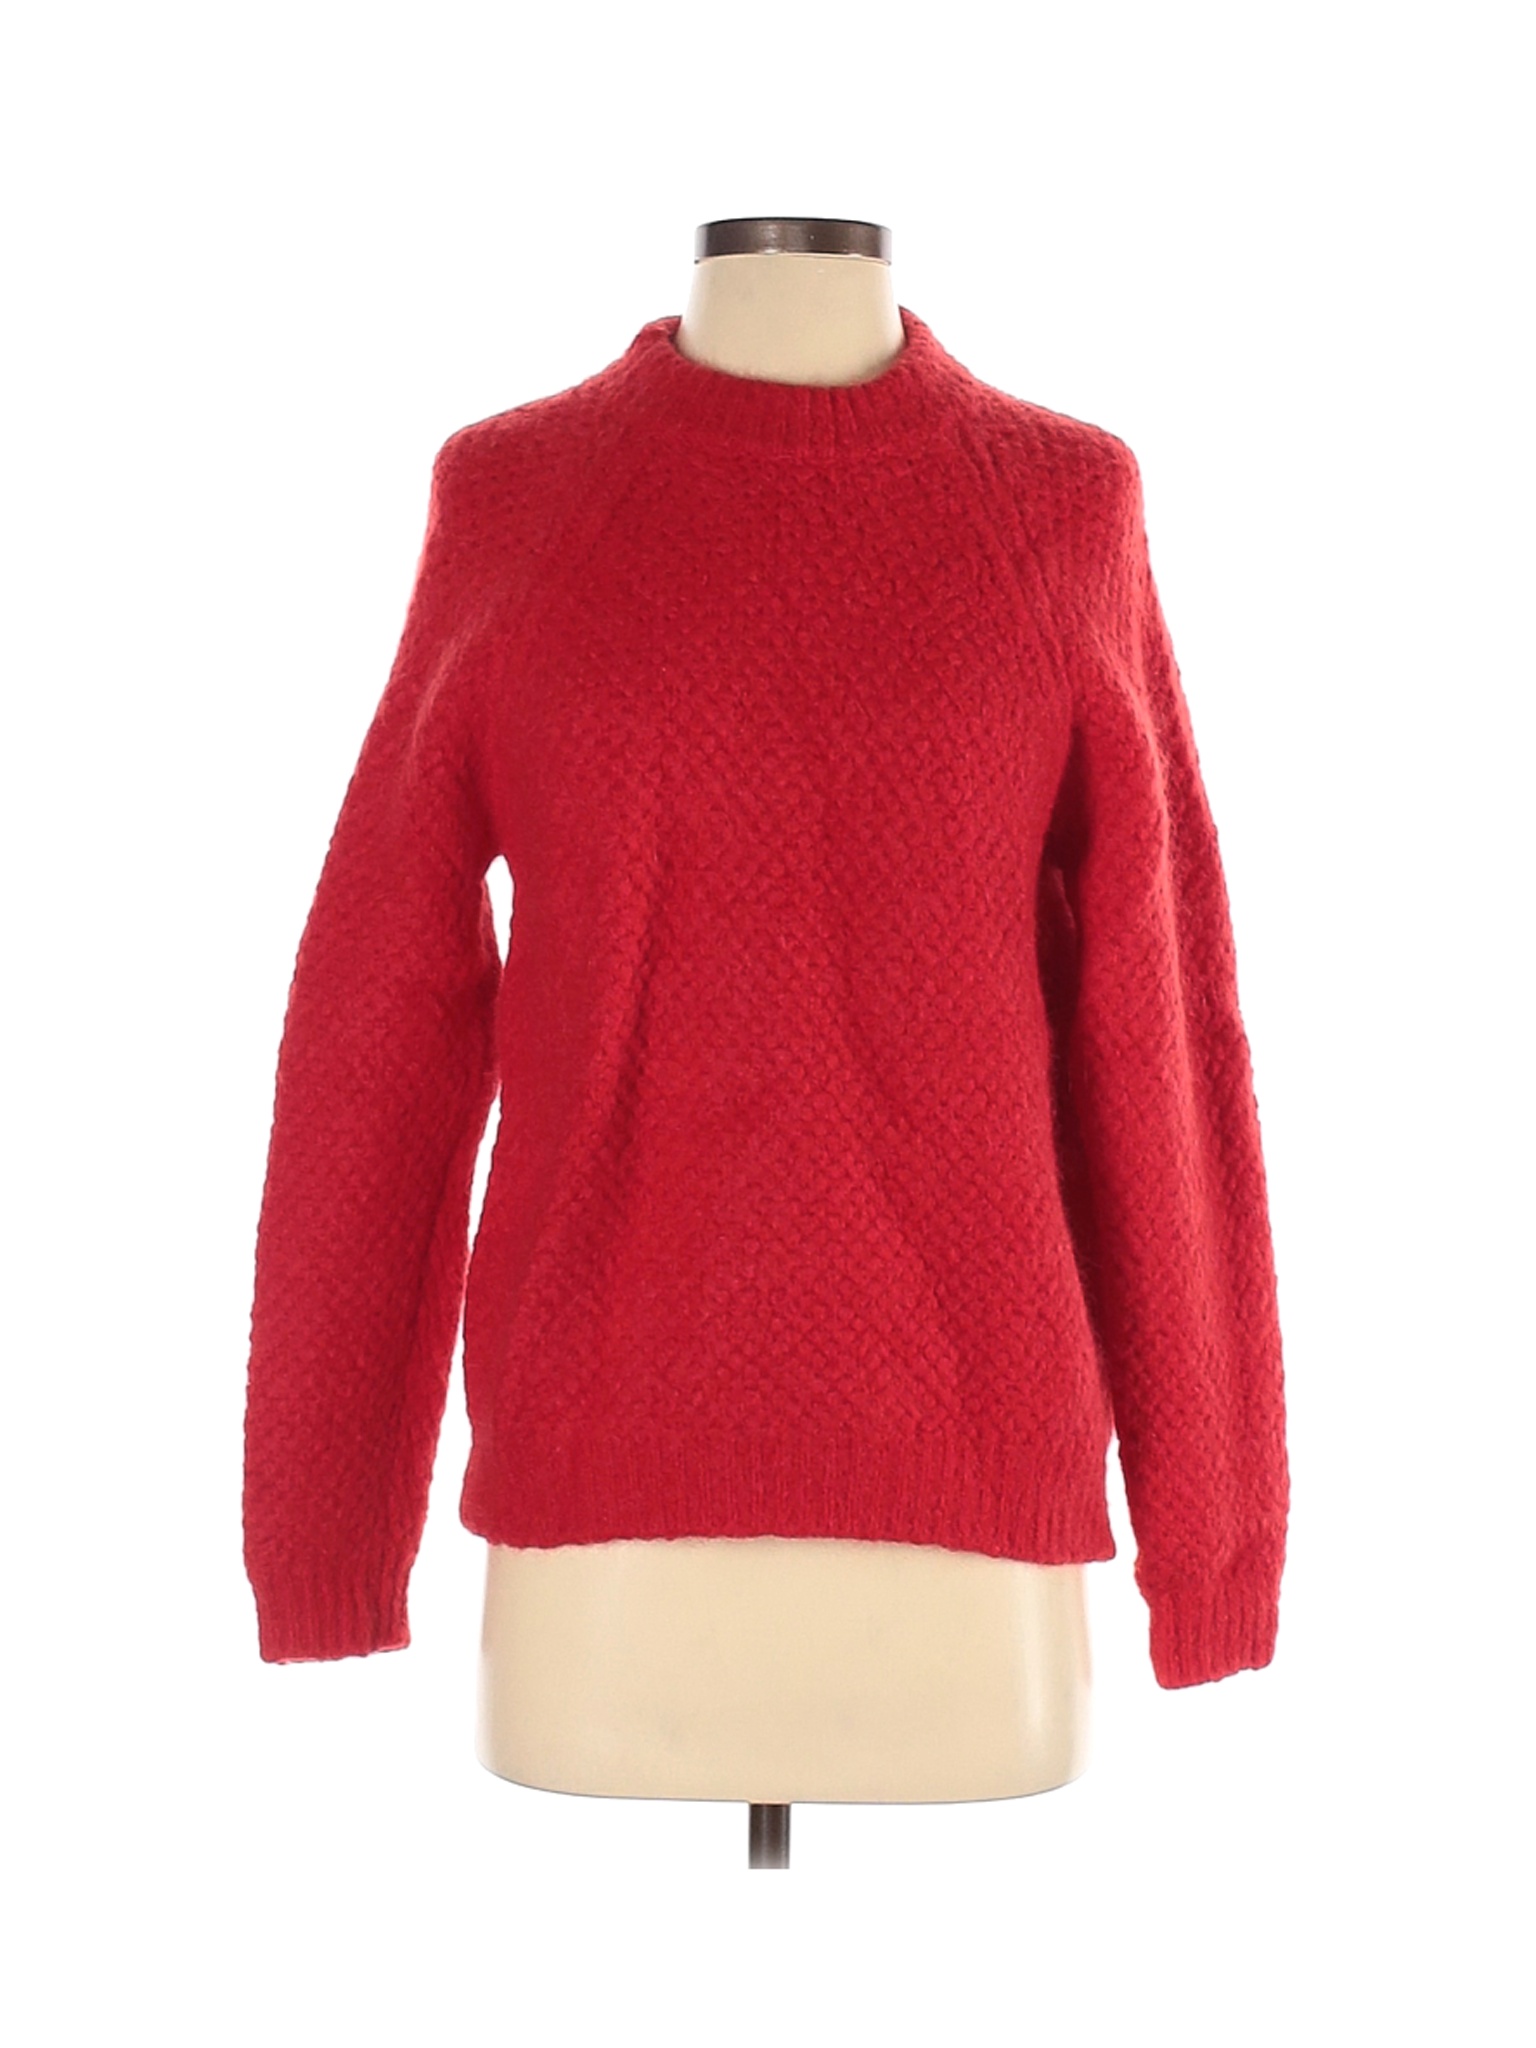 Sandro Women Red Pullover Sweater S | eBay